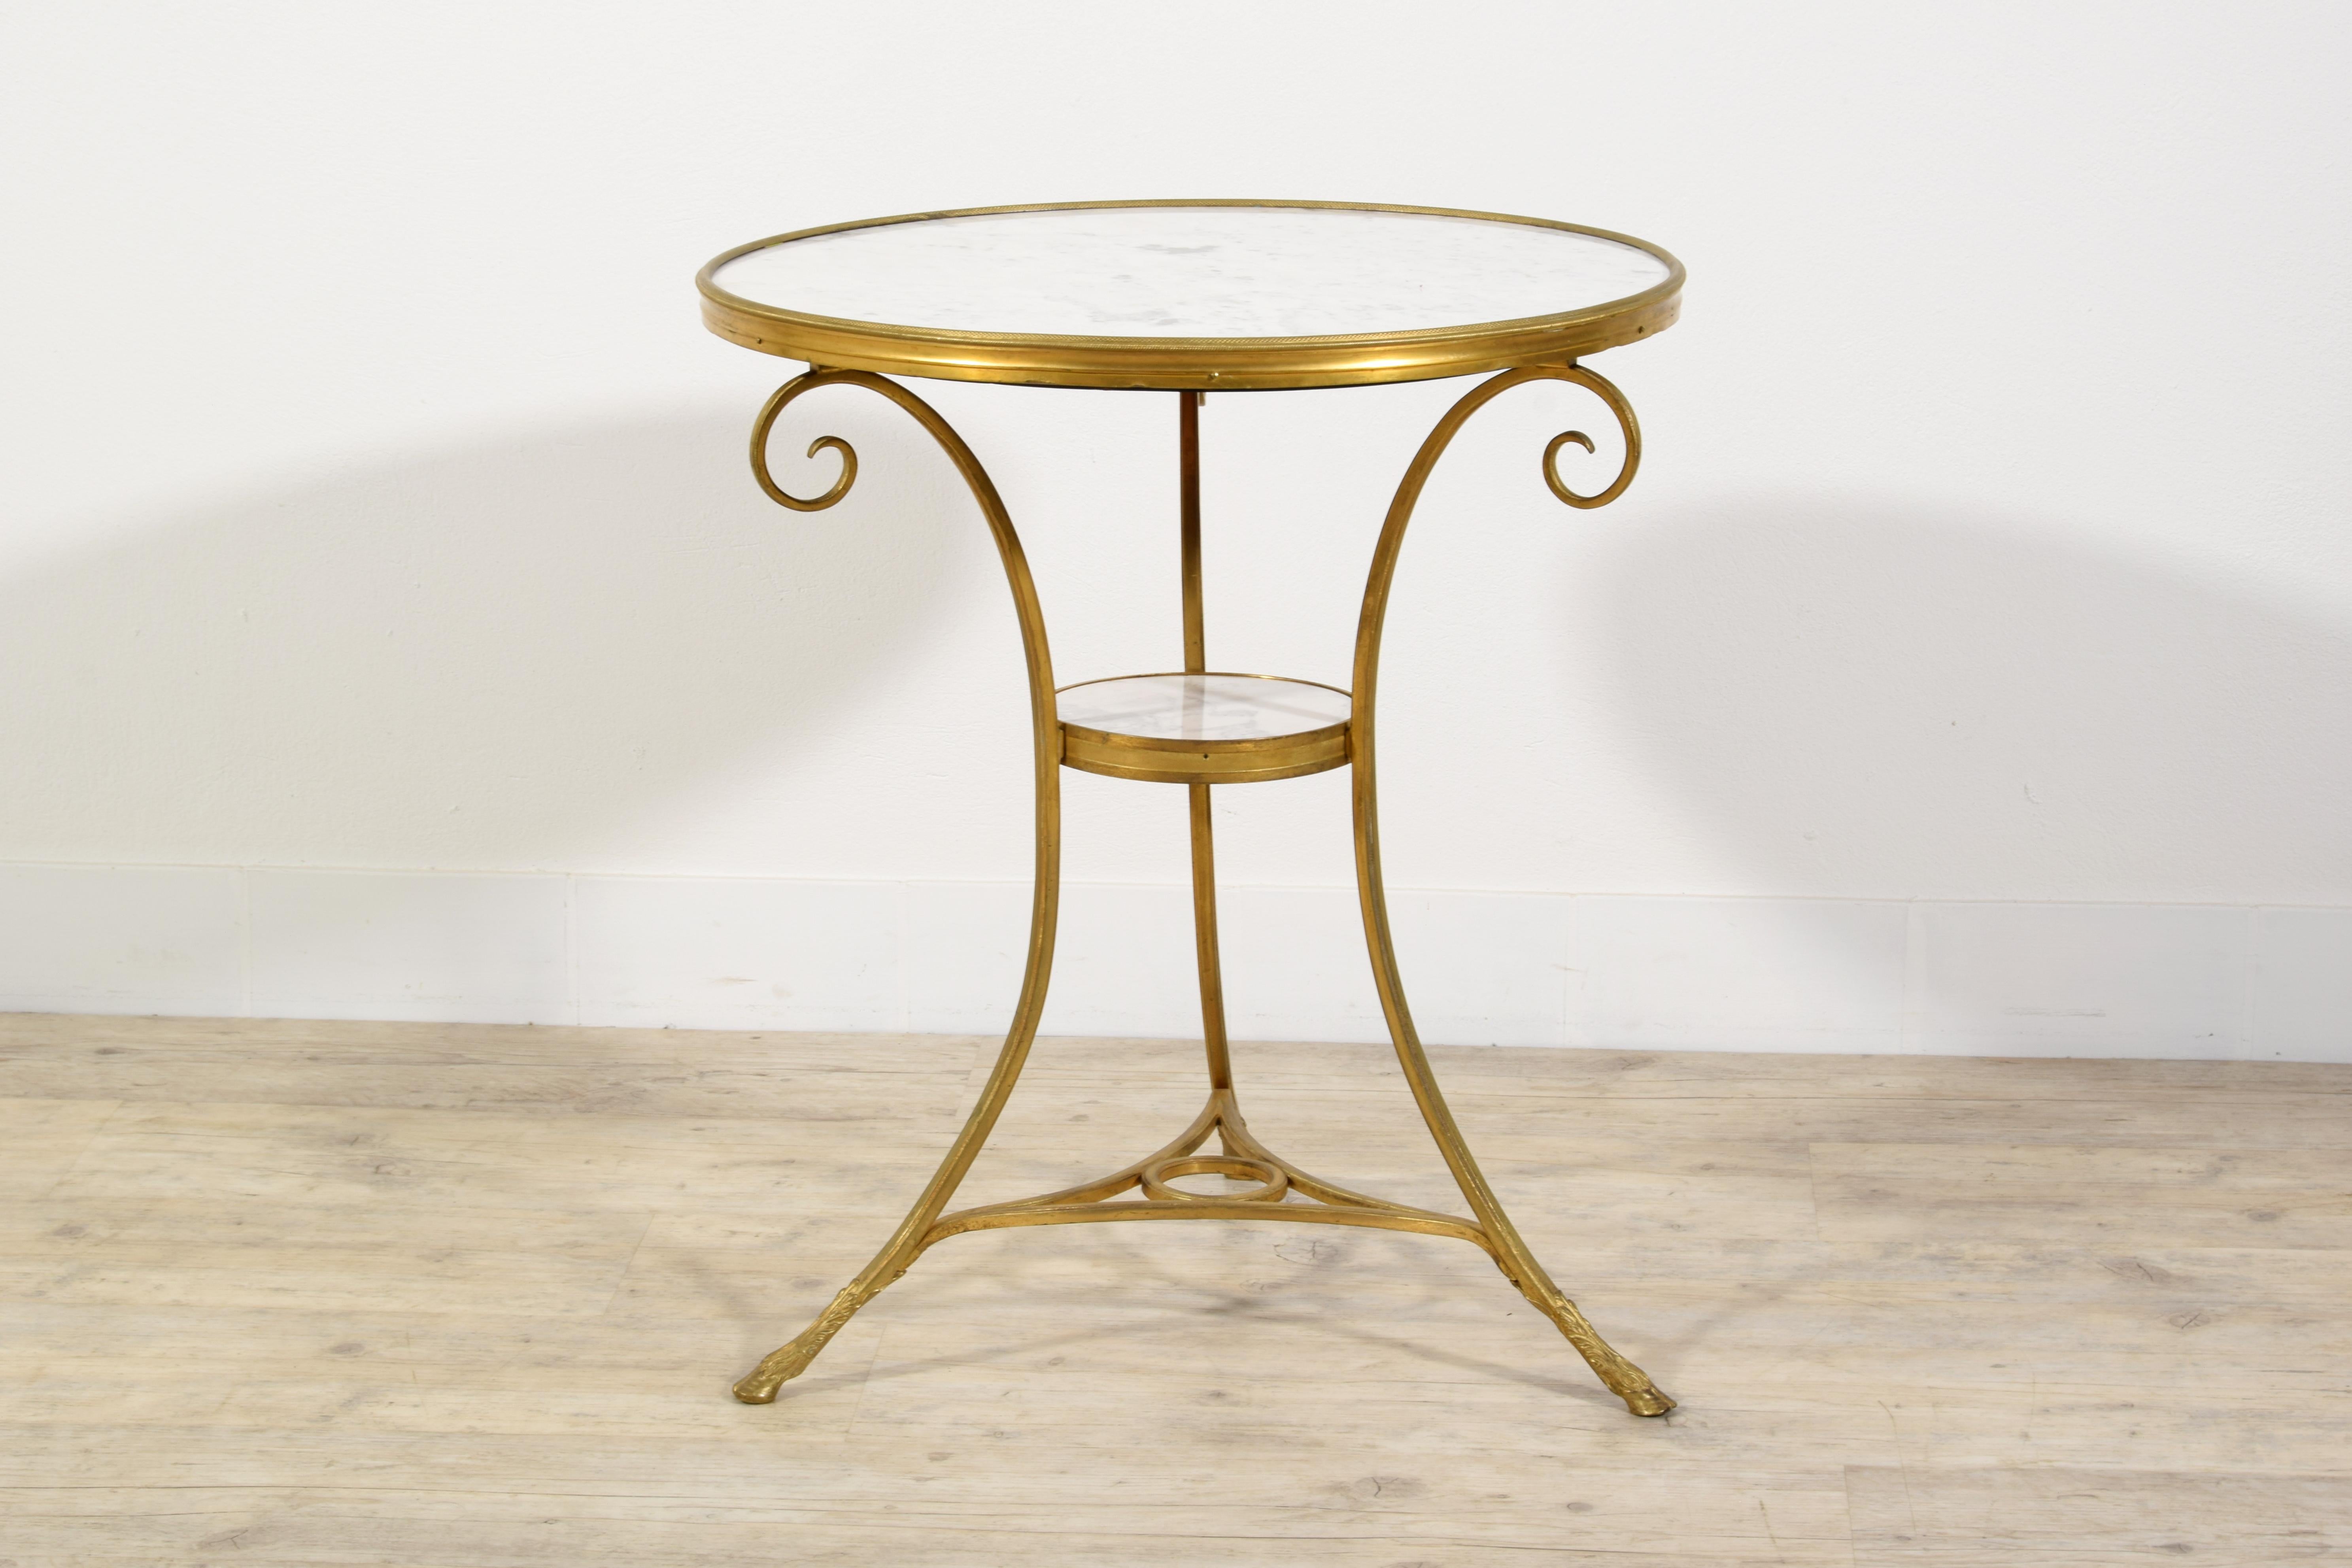 19th Century, Louis XVI Style French Gilt Bronze Tripod Coffee Table or Guéridon For Sale 11